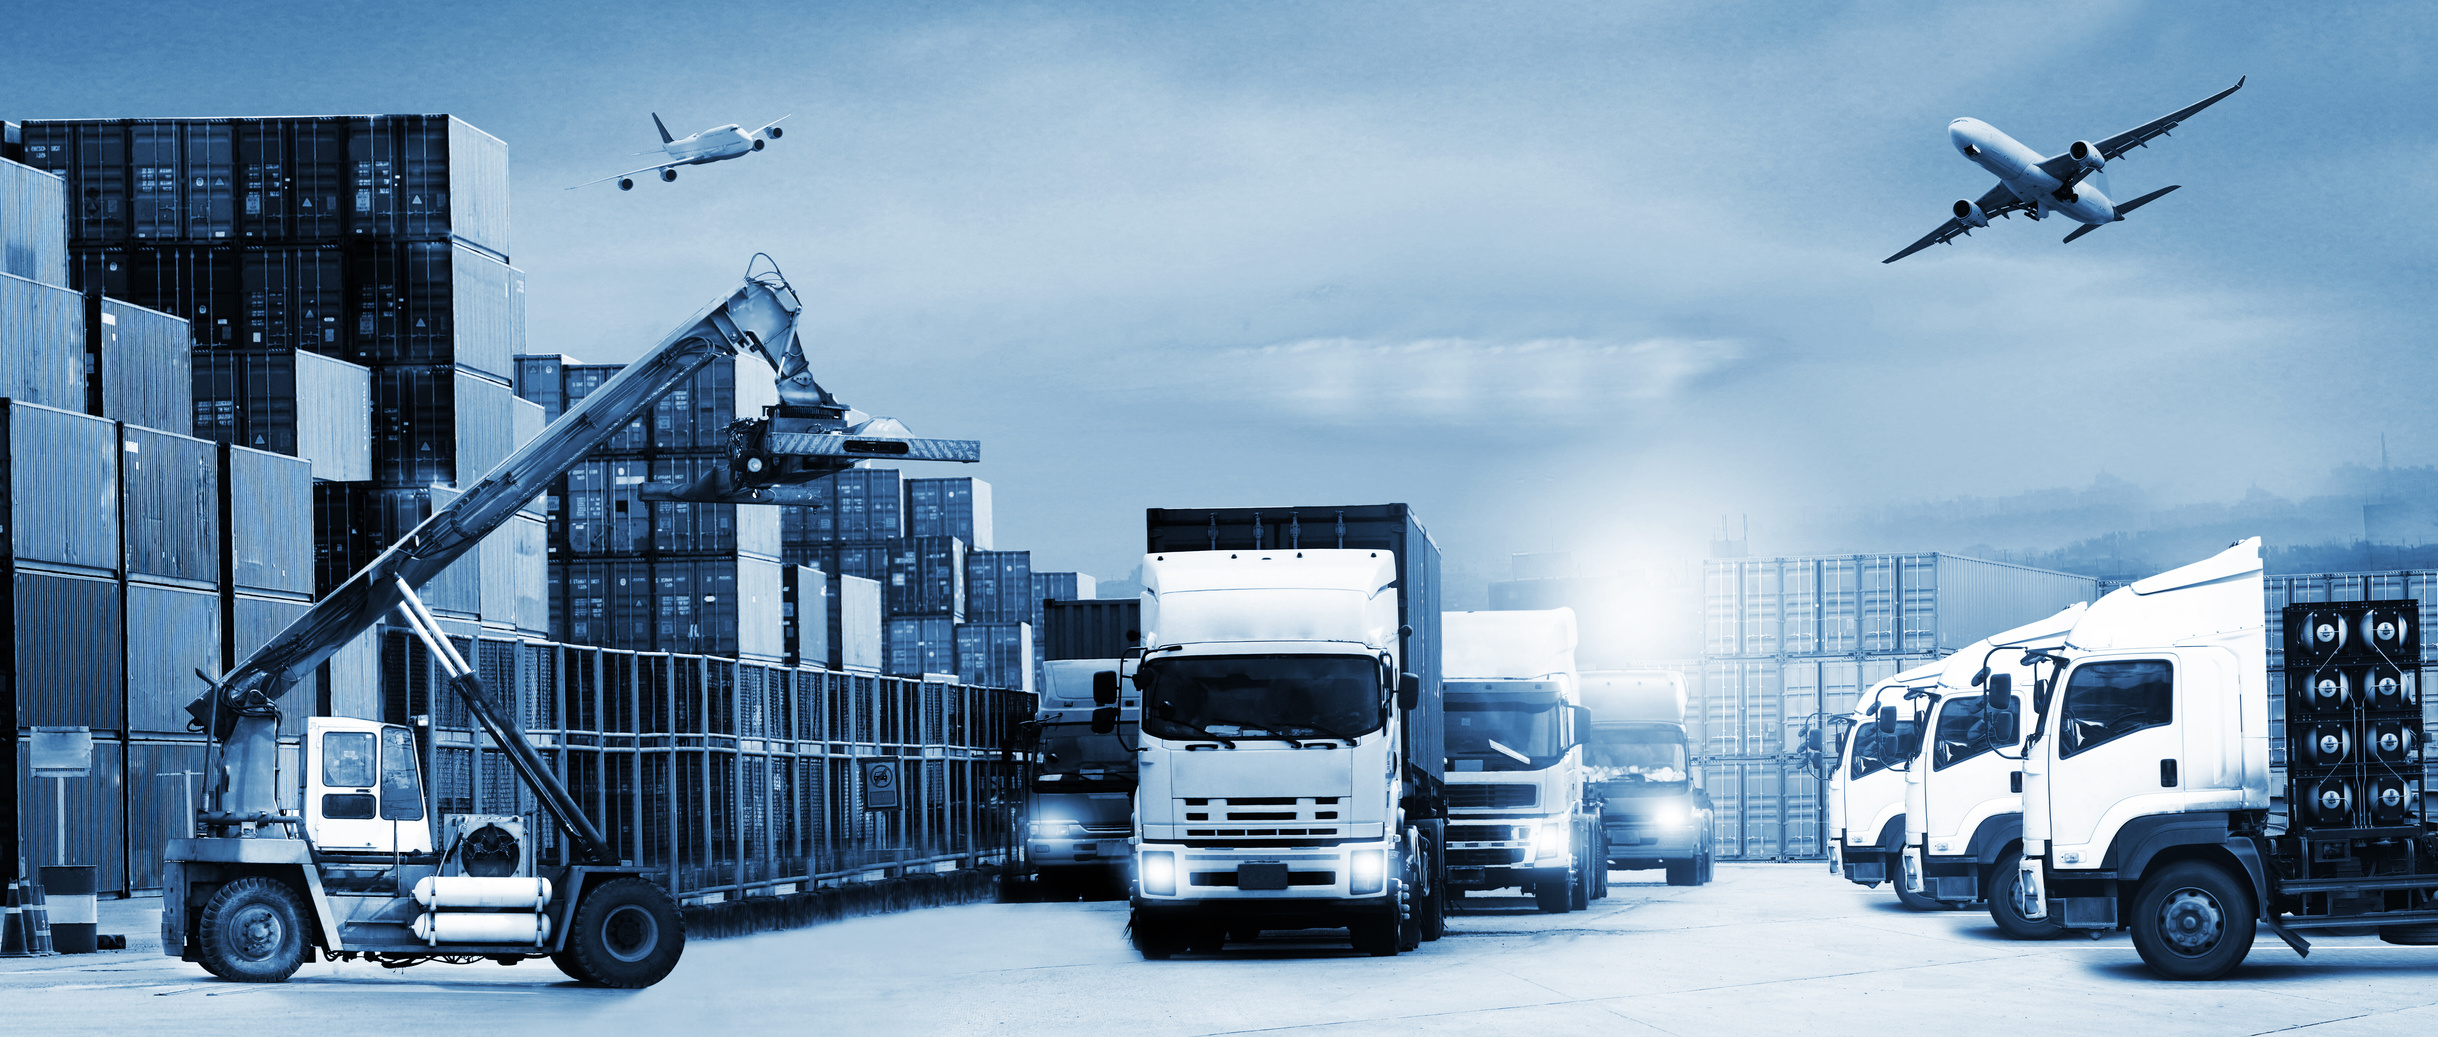 Logistics Industrial  and Transportation